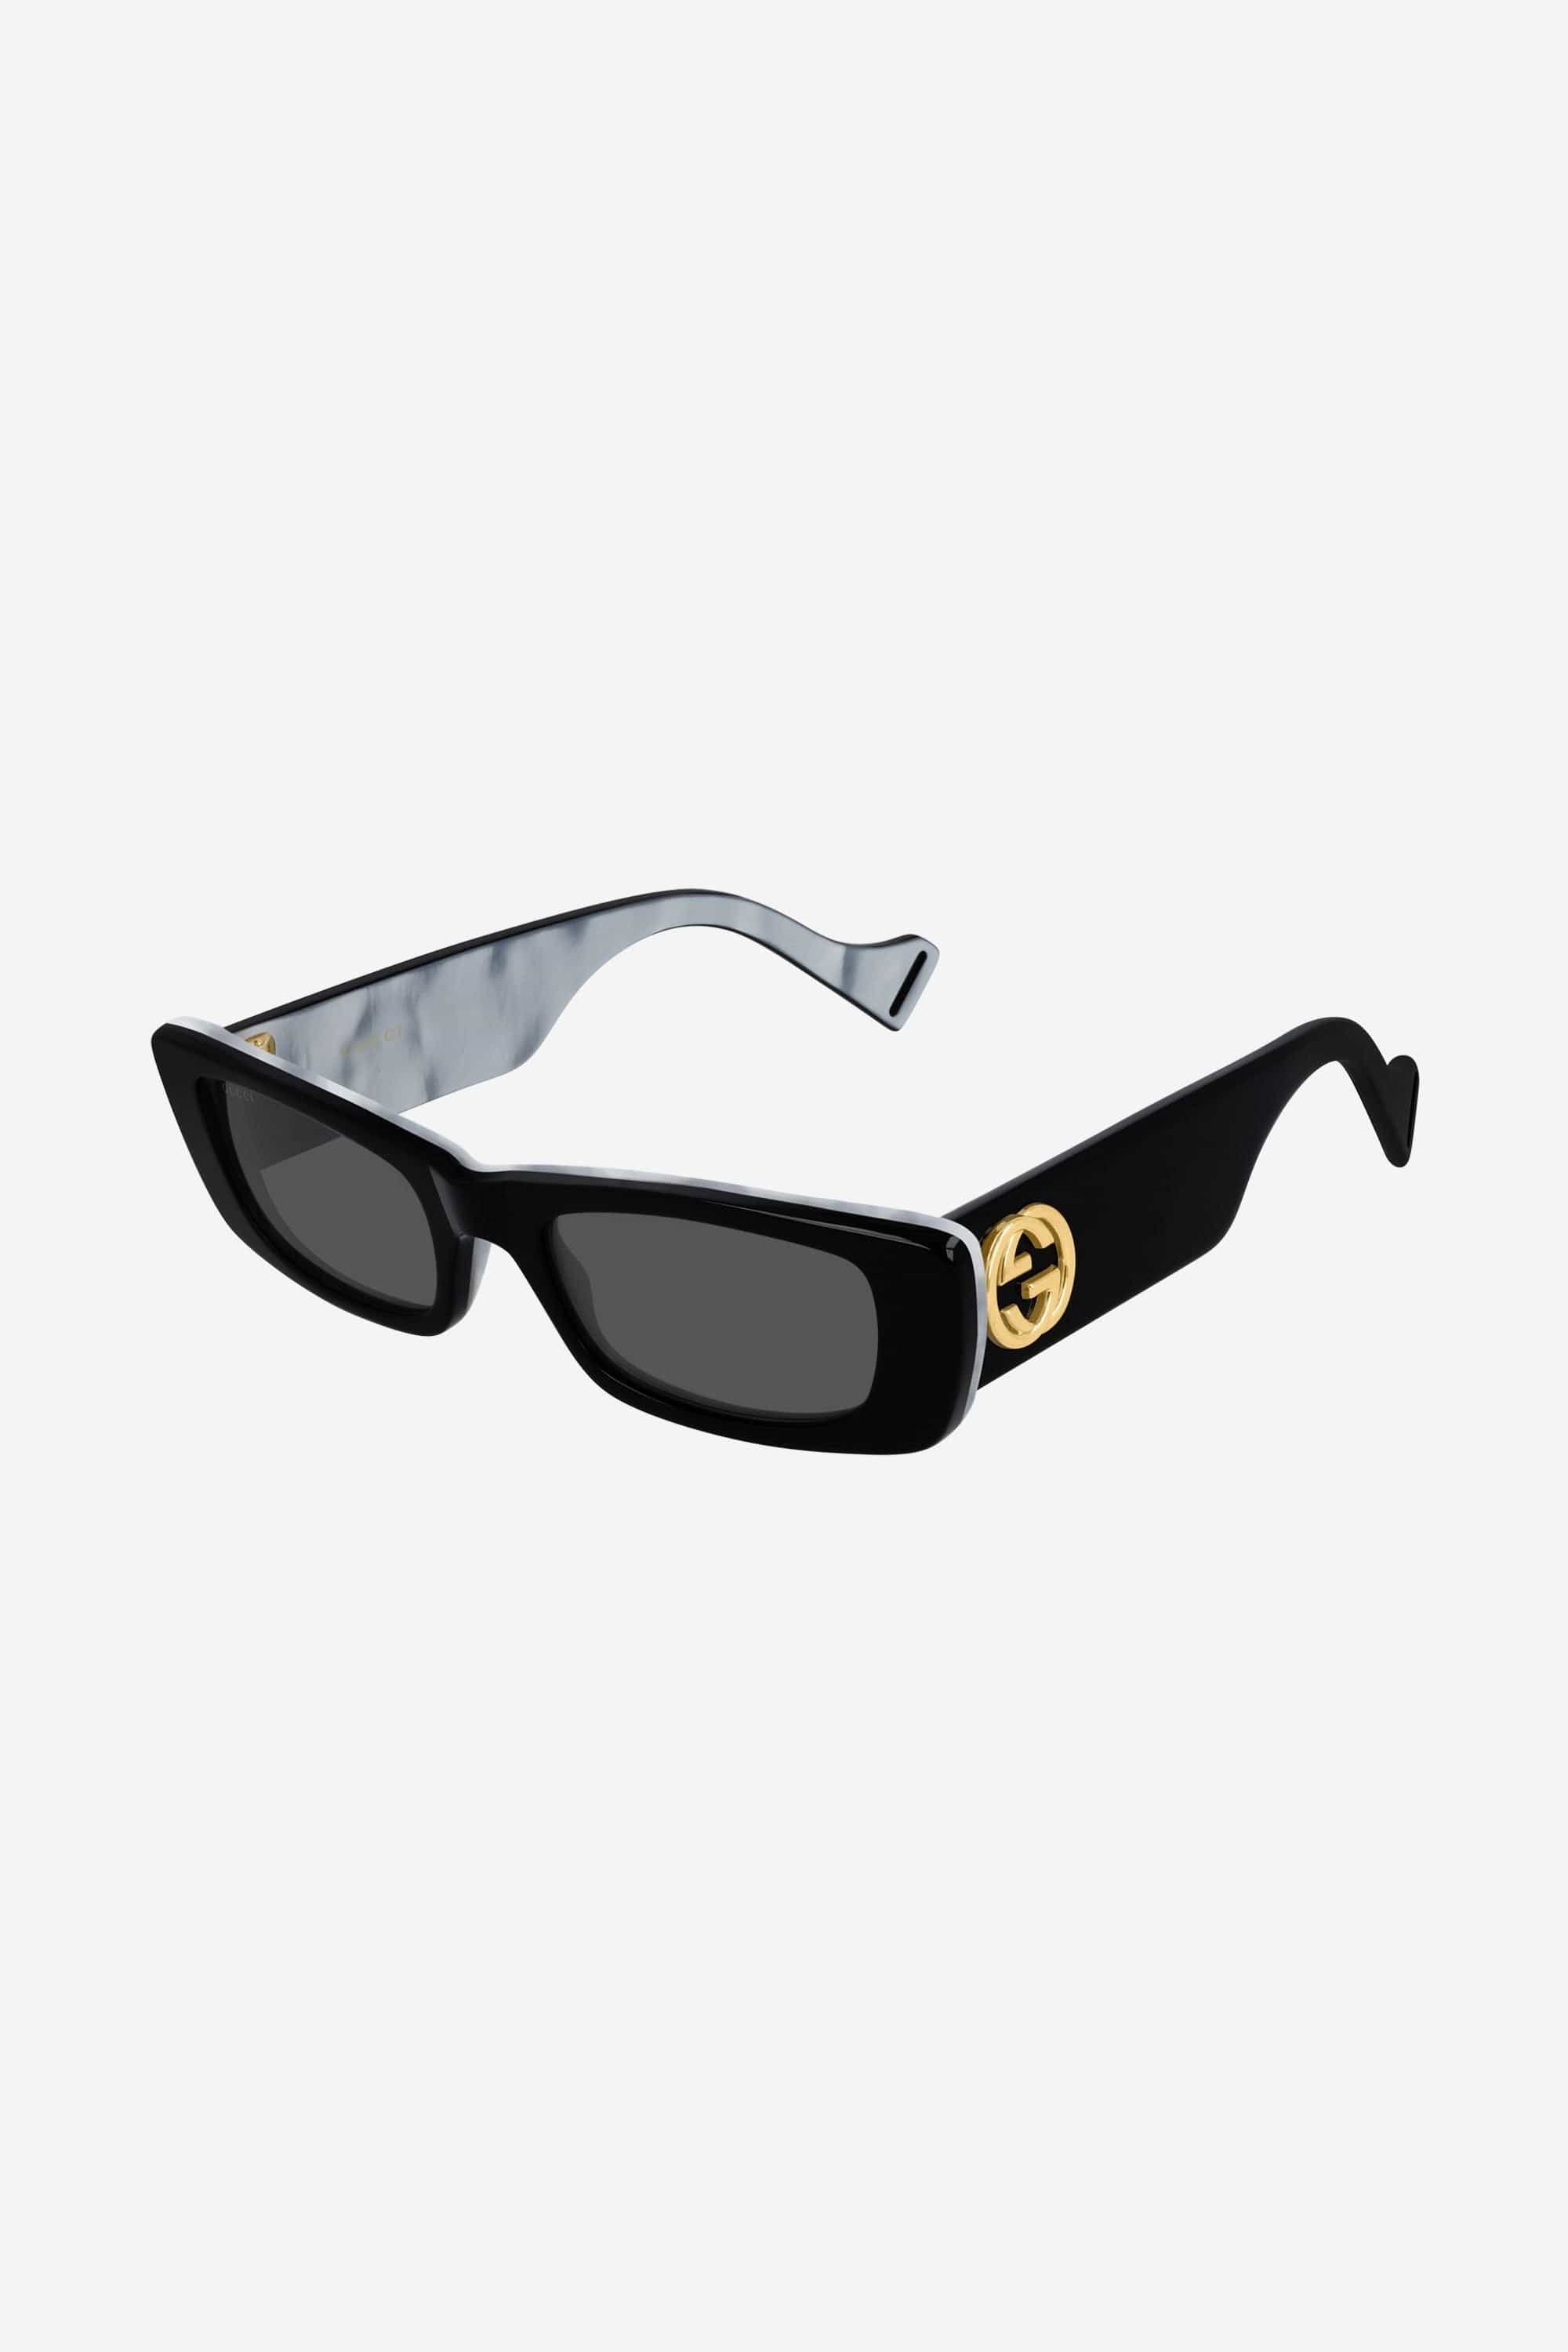 Gucci black micro rectangular female sunglasses